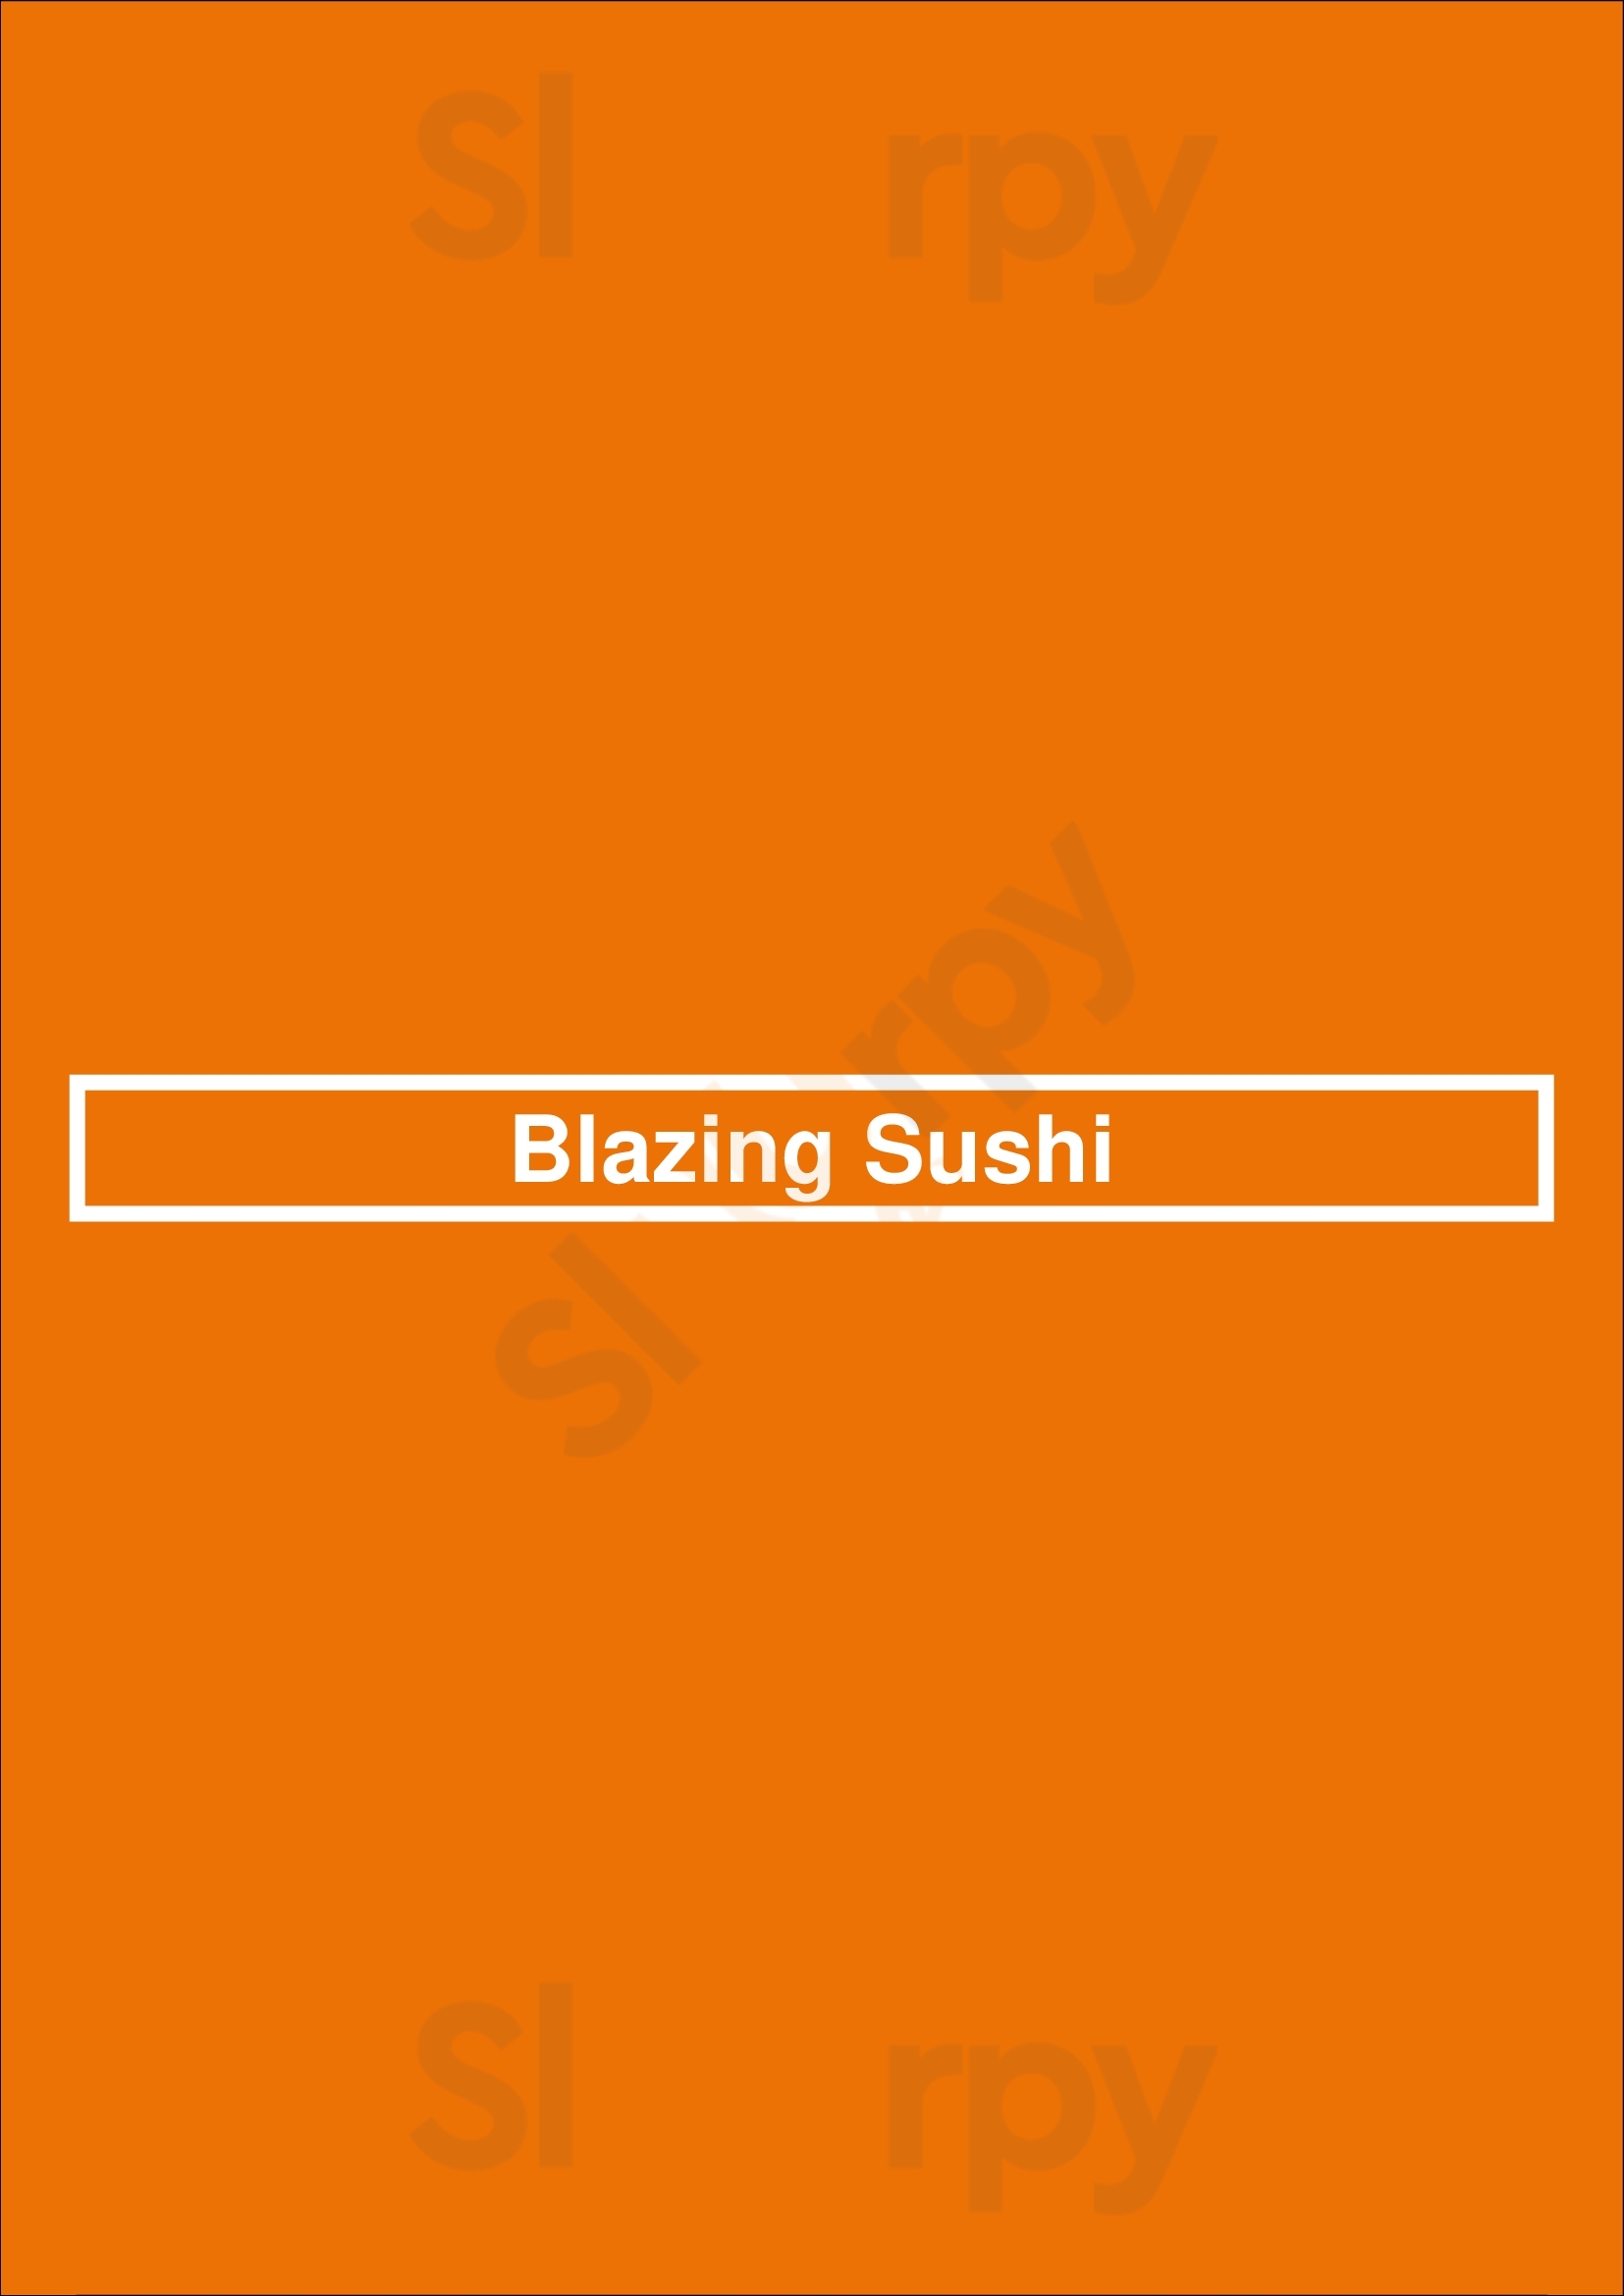 Blazing Sushi Vancouver Menu - 1